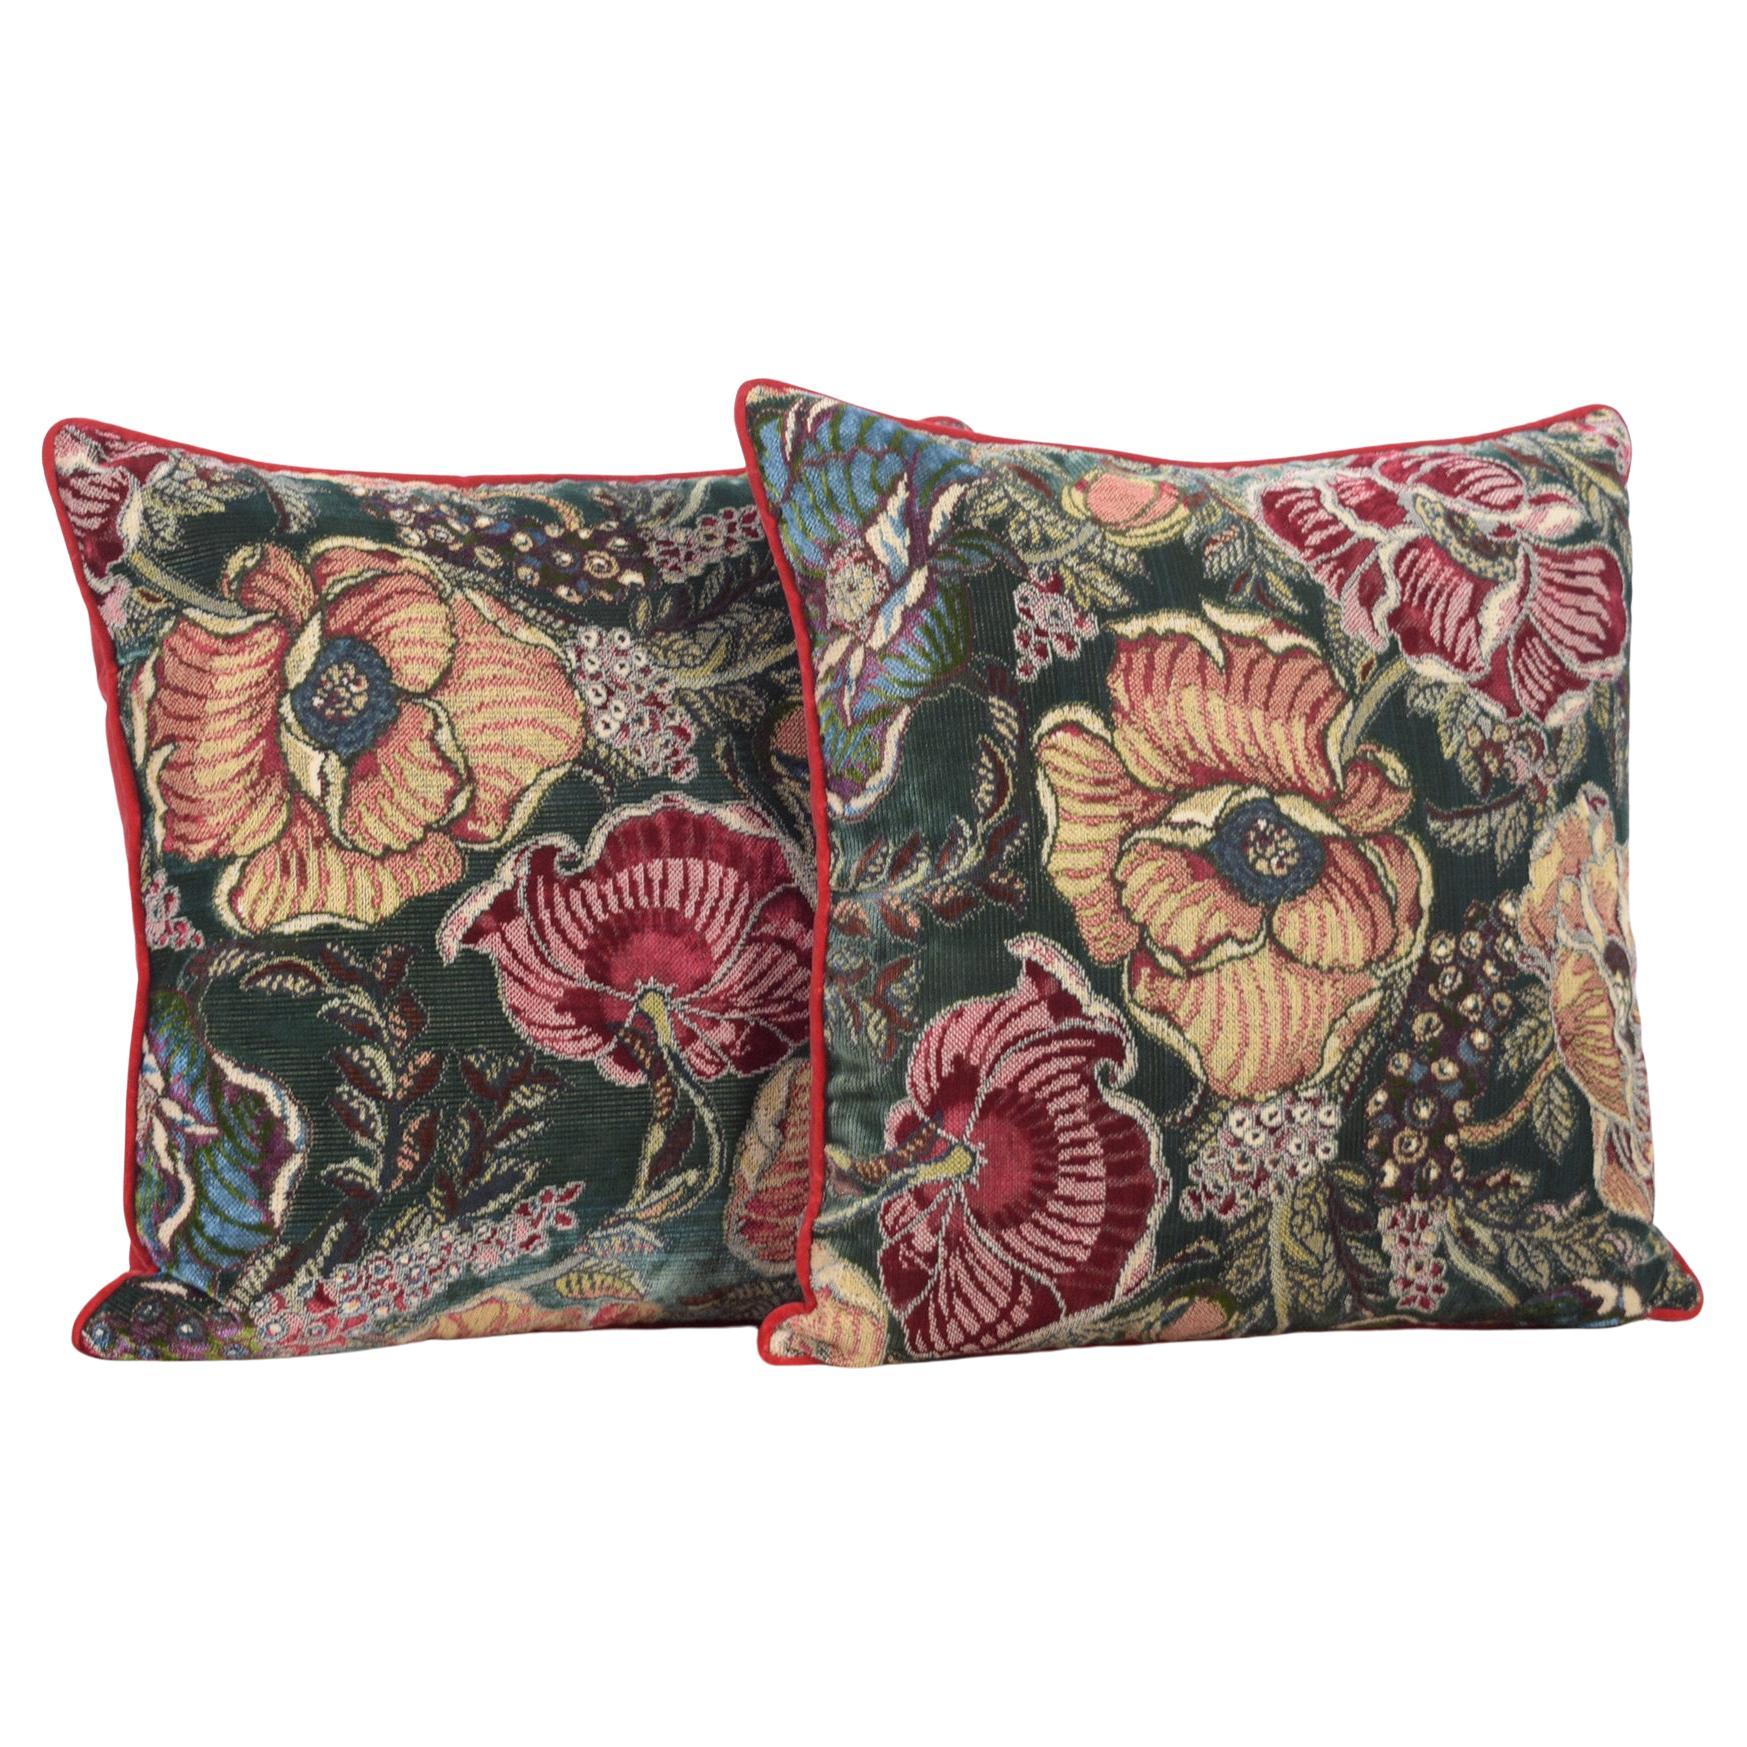 Antique Pillows with Red Velvet Floral Elegance For Sale